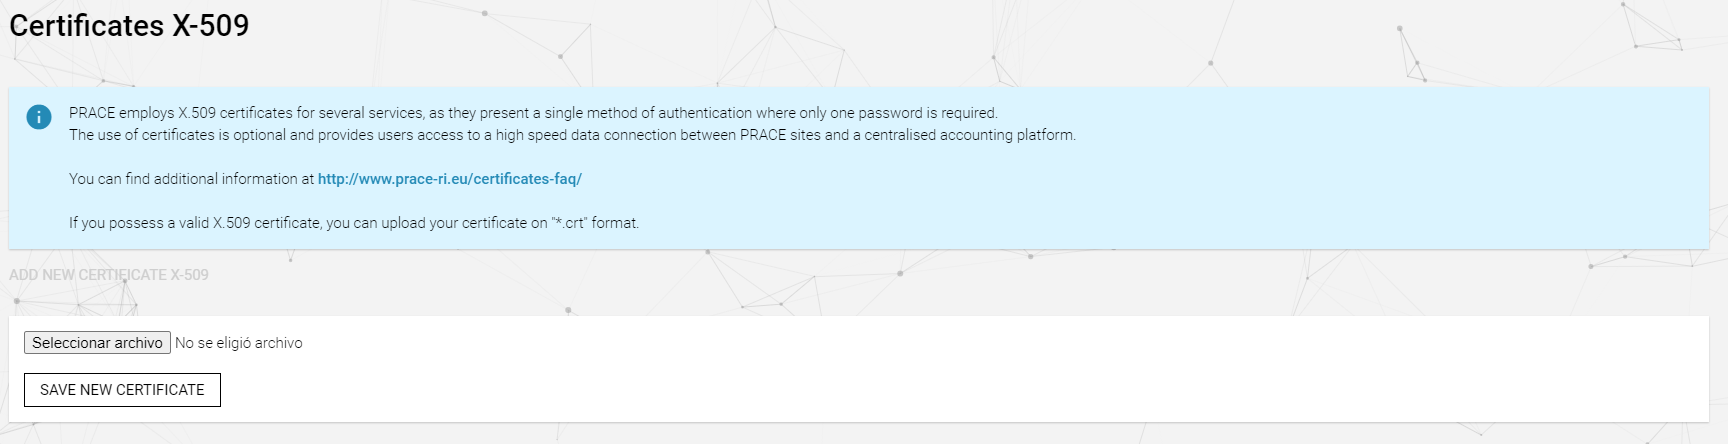 HPC Accounts x509 certificate upload